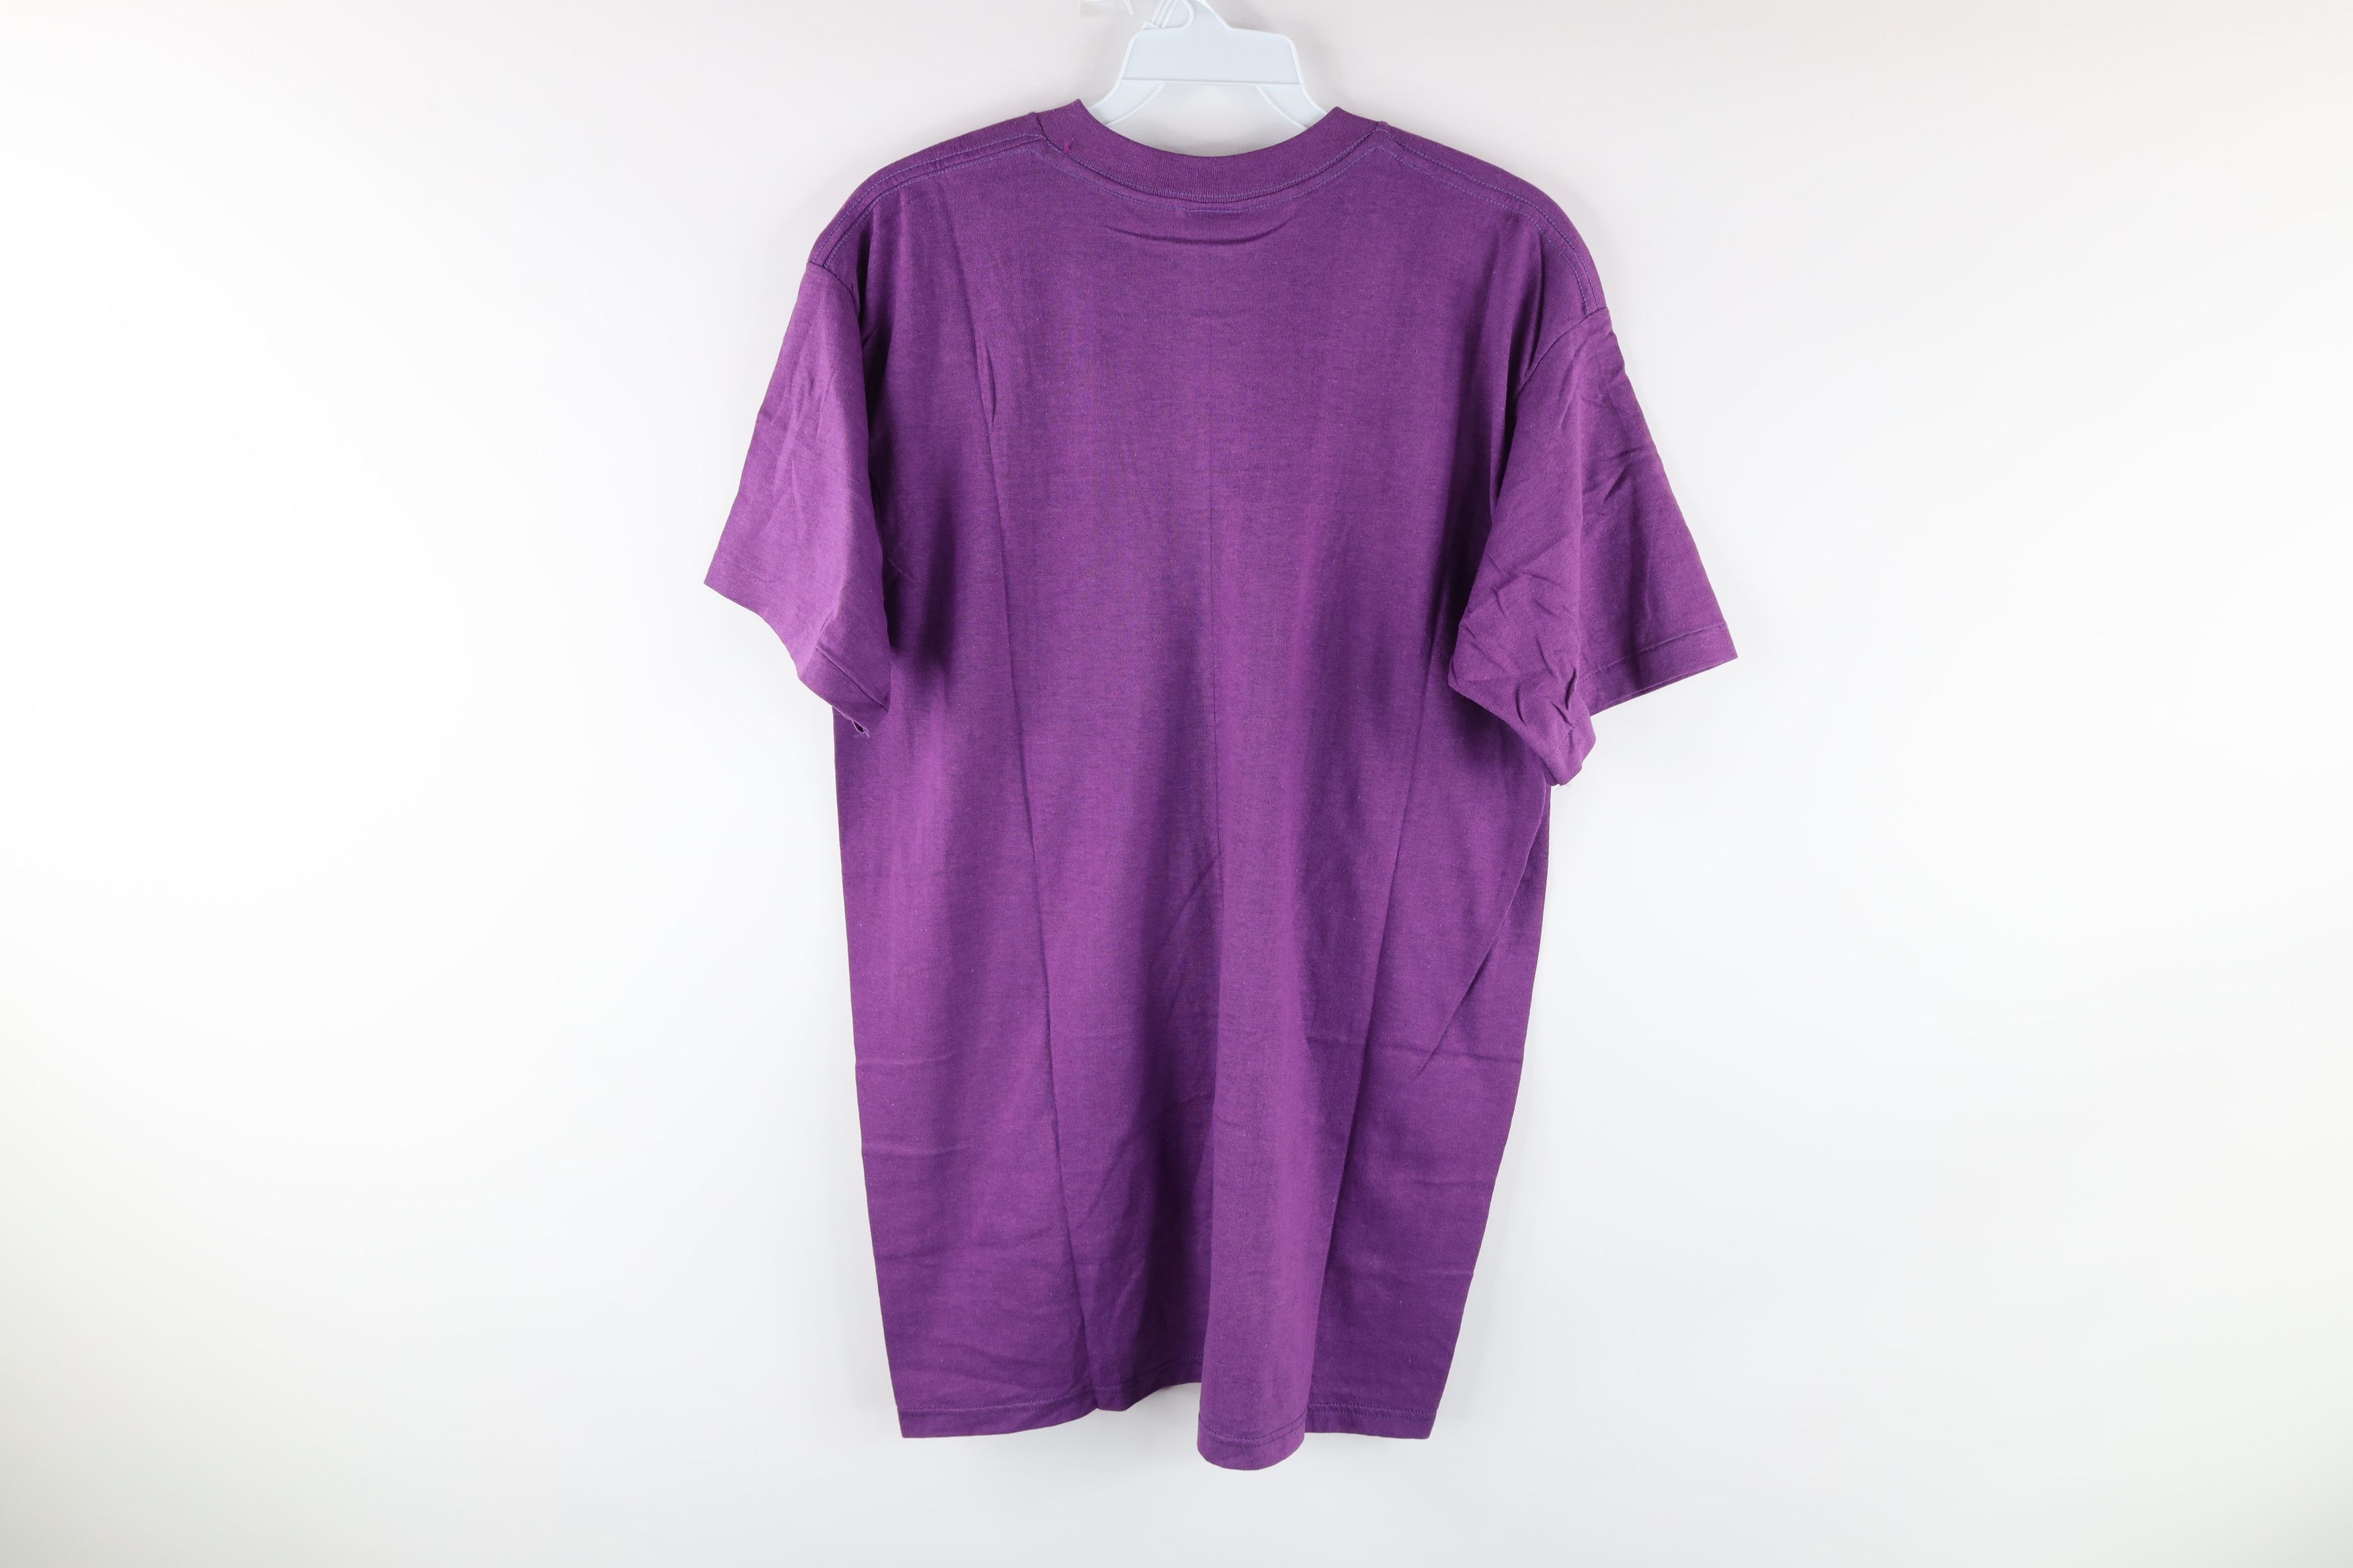 Vintage Vintage 80s Streetwear Short Sleeve Pocket T-Shirt Purple Size US L / EU 52-54 / 3 - 5 Thumbnail